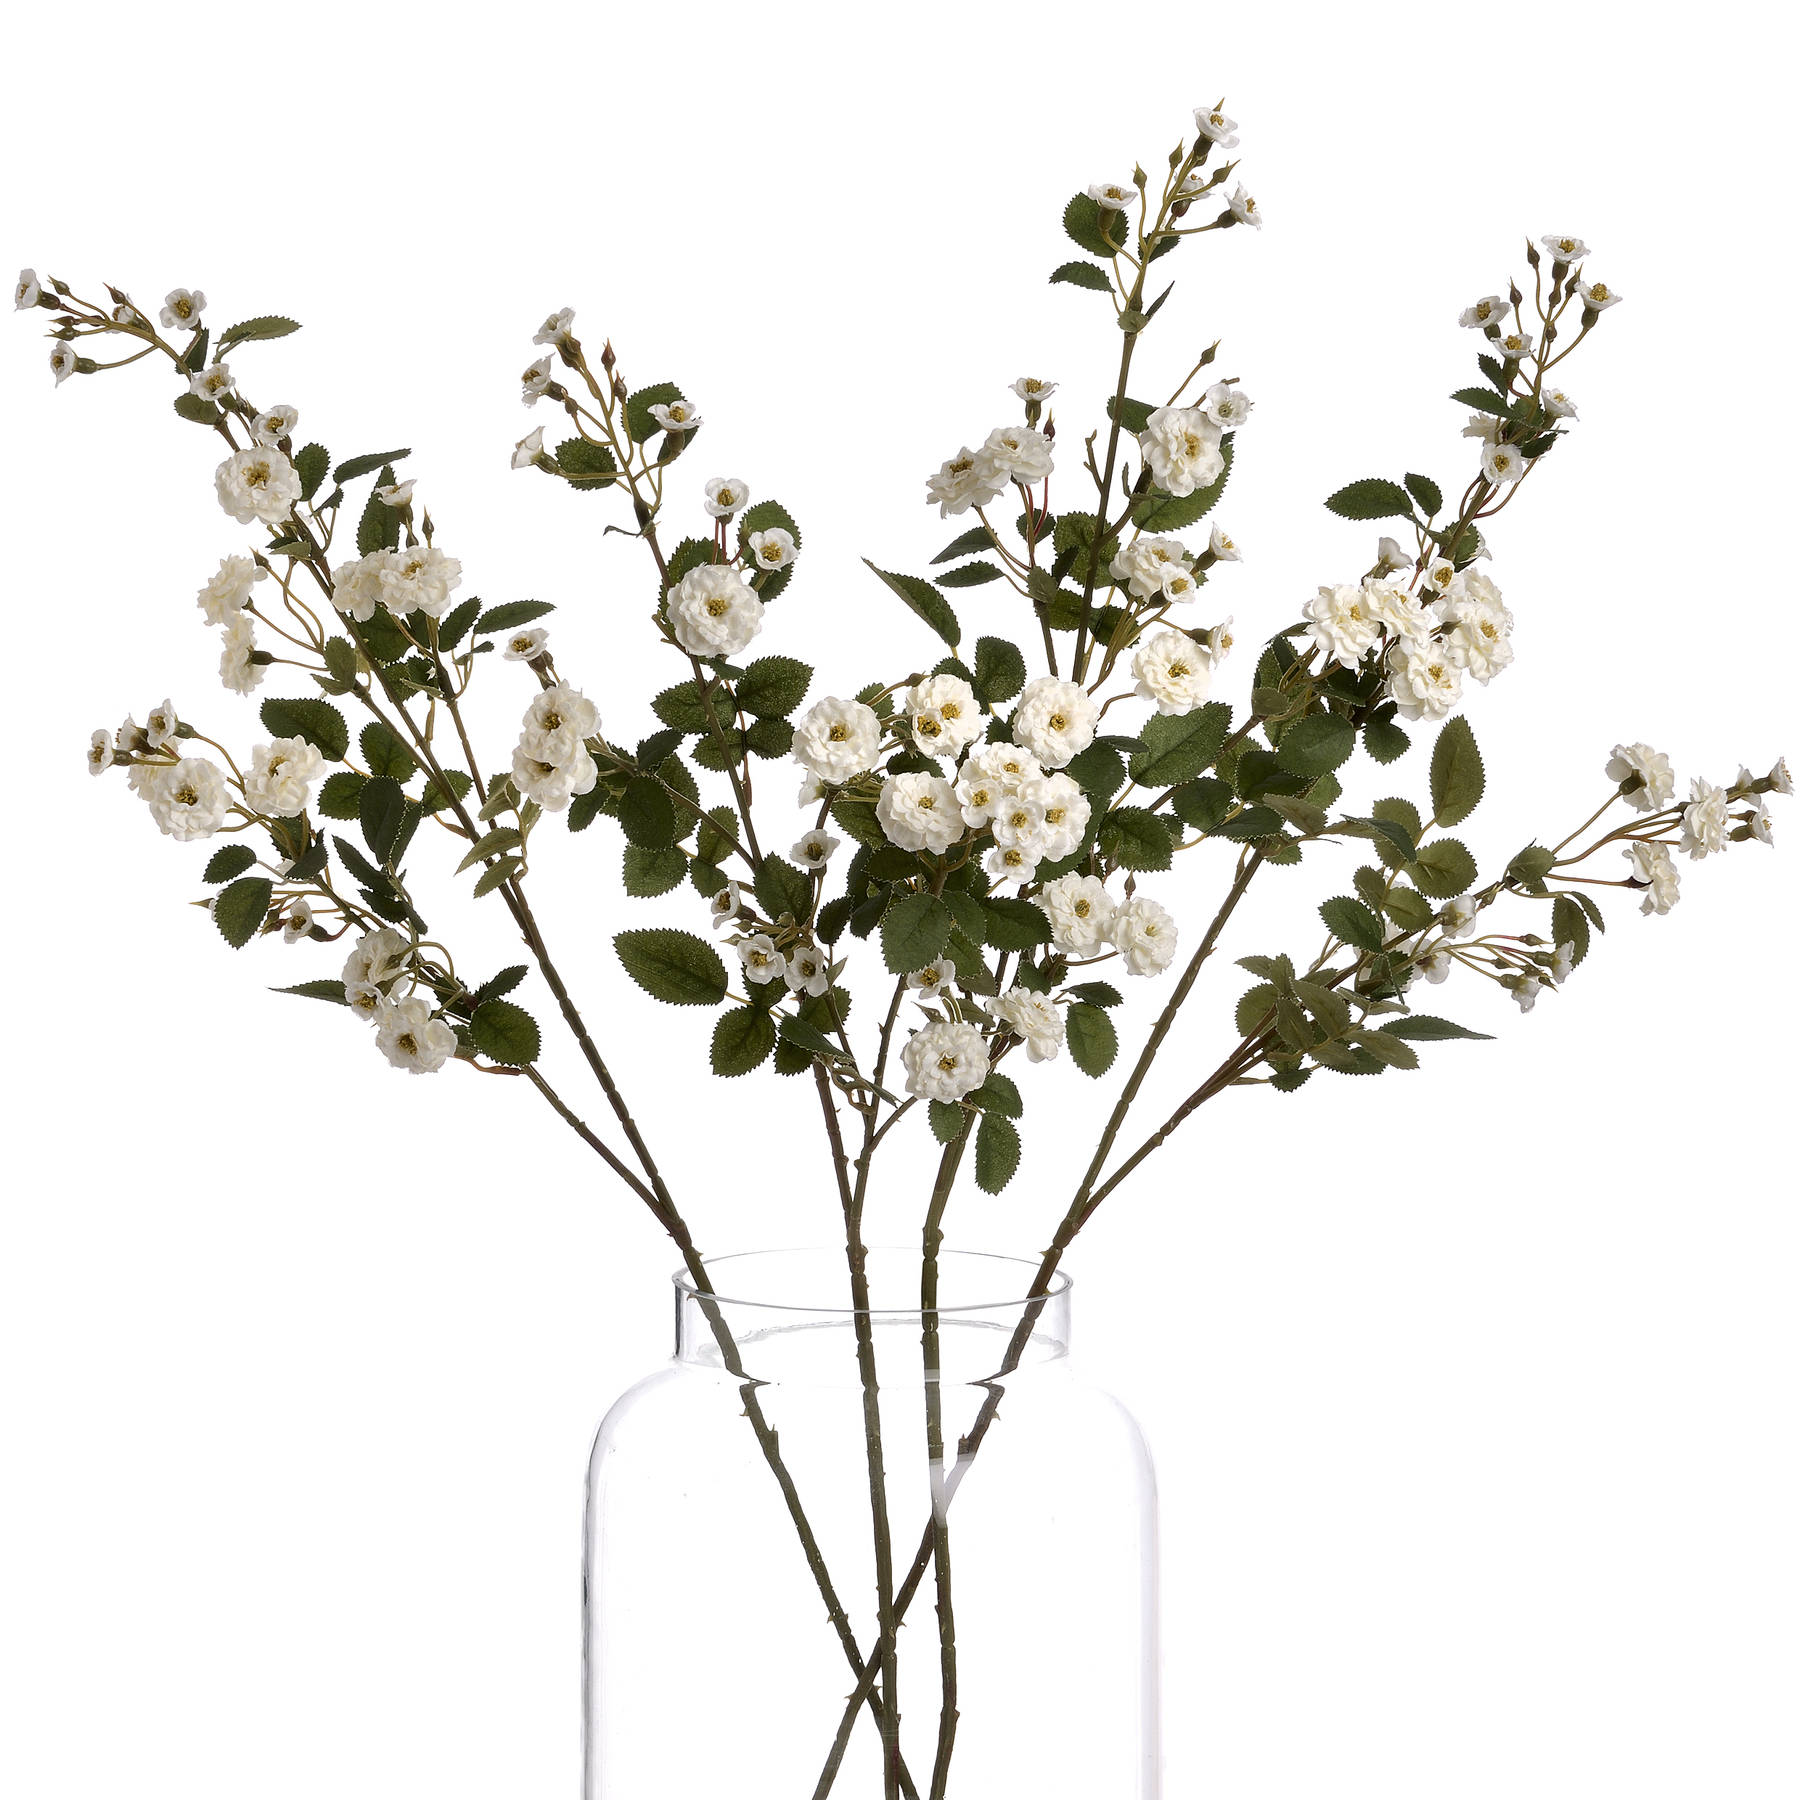 White Wild Meadow Rose - Image 4